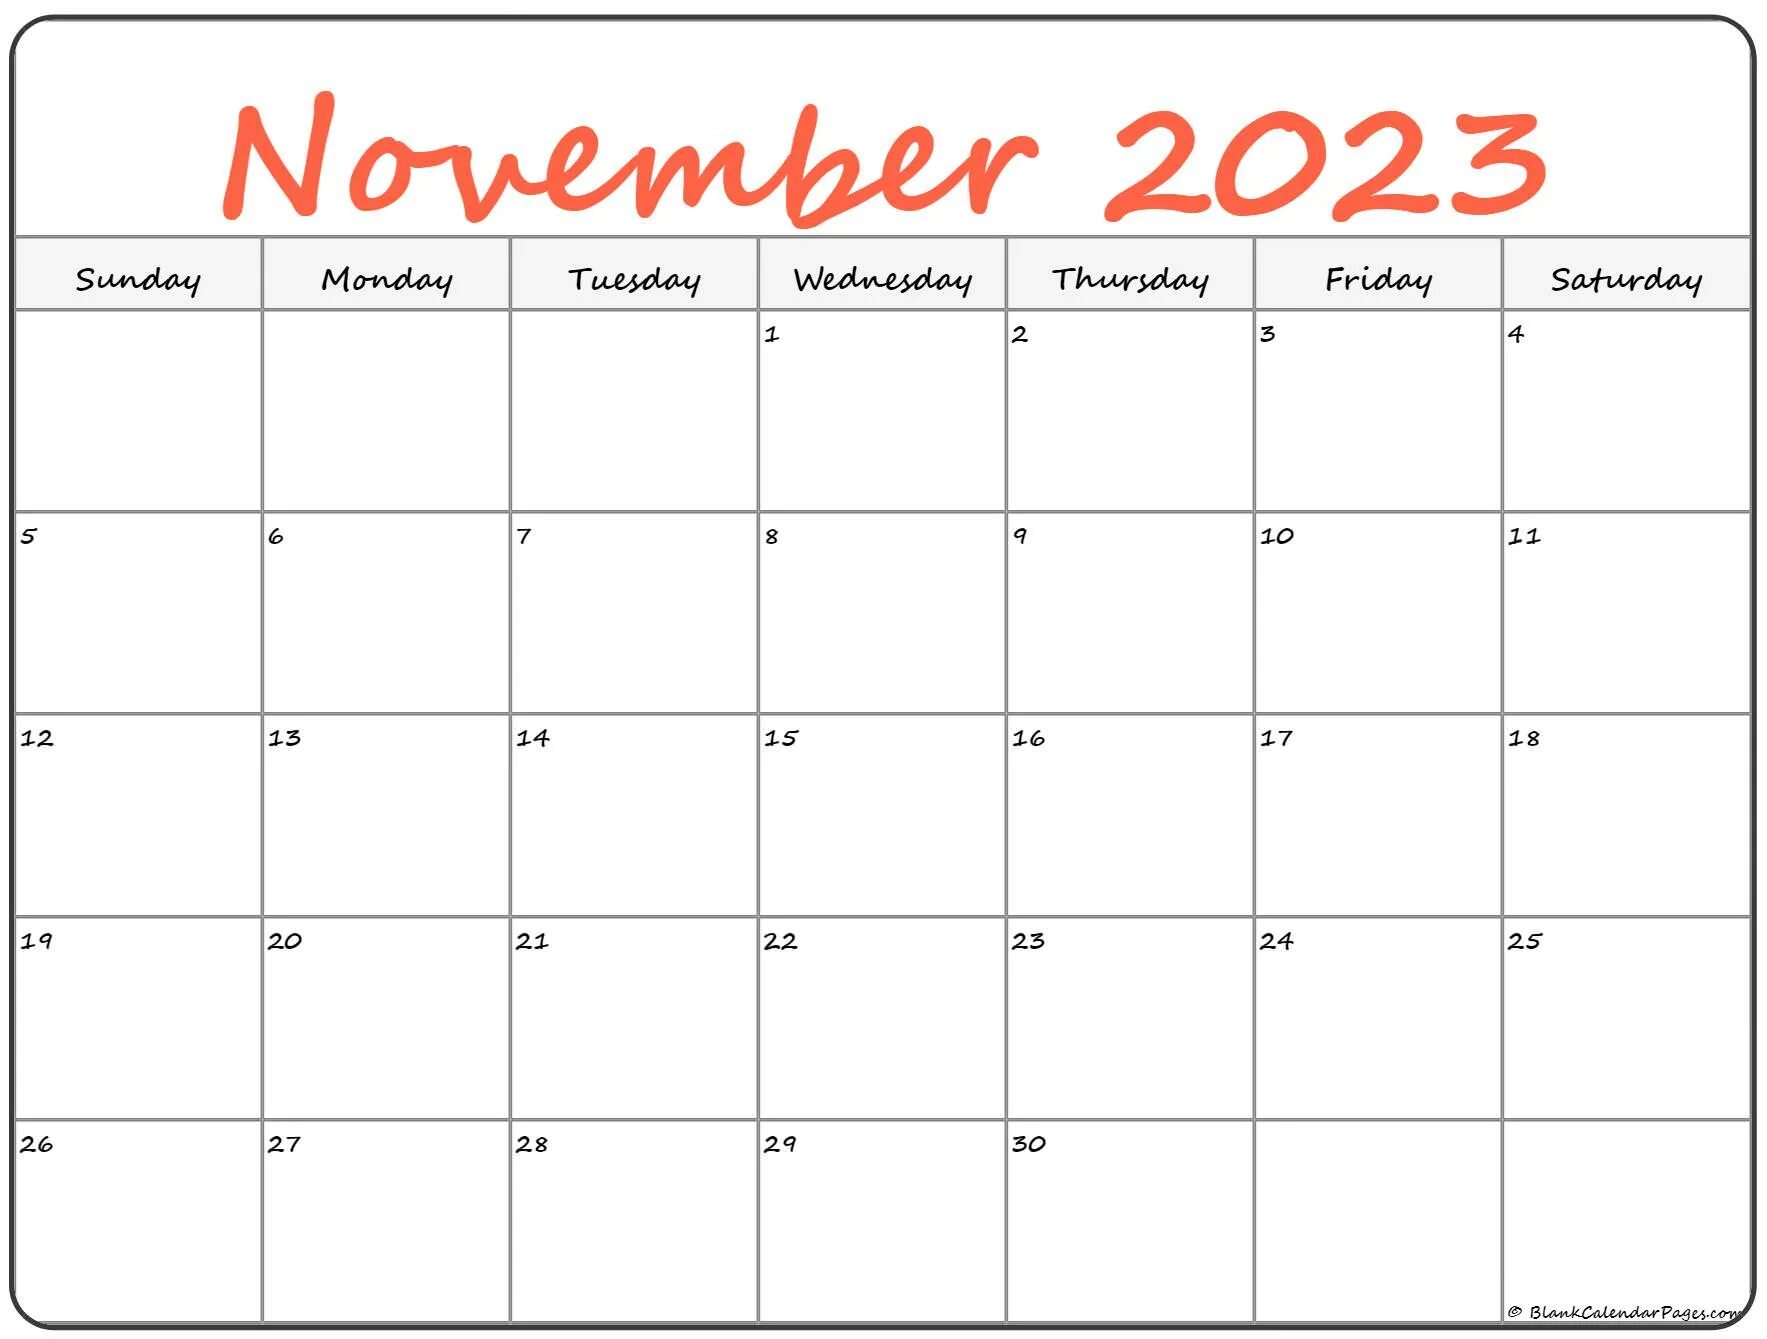 March 2022. Календарь декабрь 2022. Календарь ноябрь 2022. Календарь на март 2022 года. Стрижки в марте месяце 2024 года